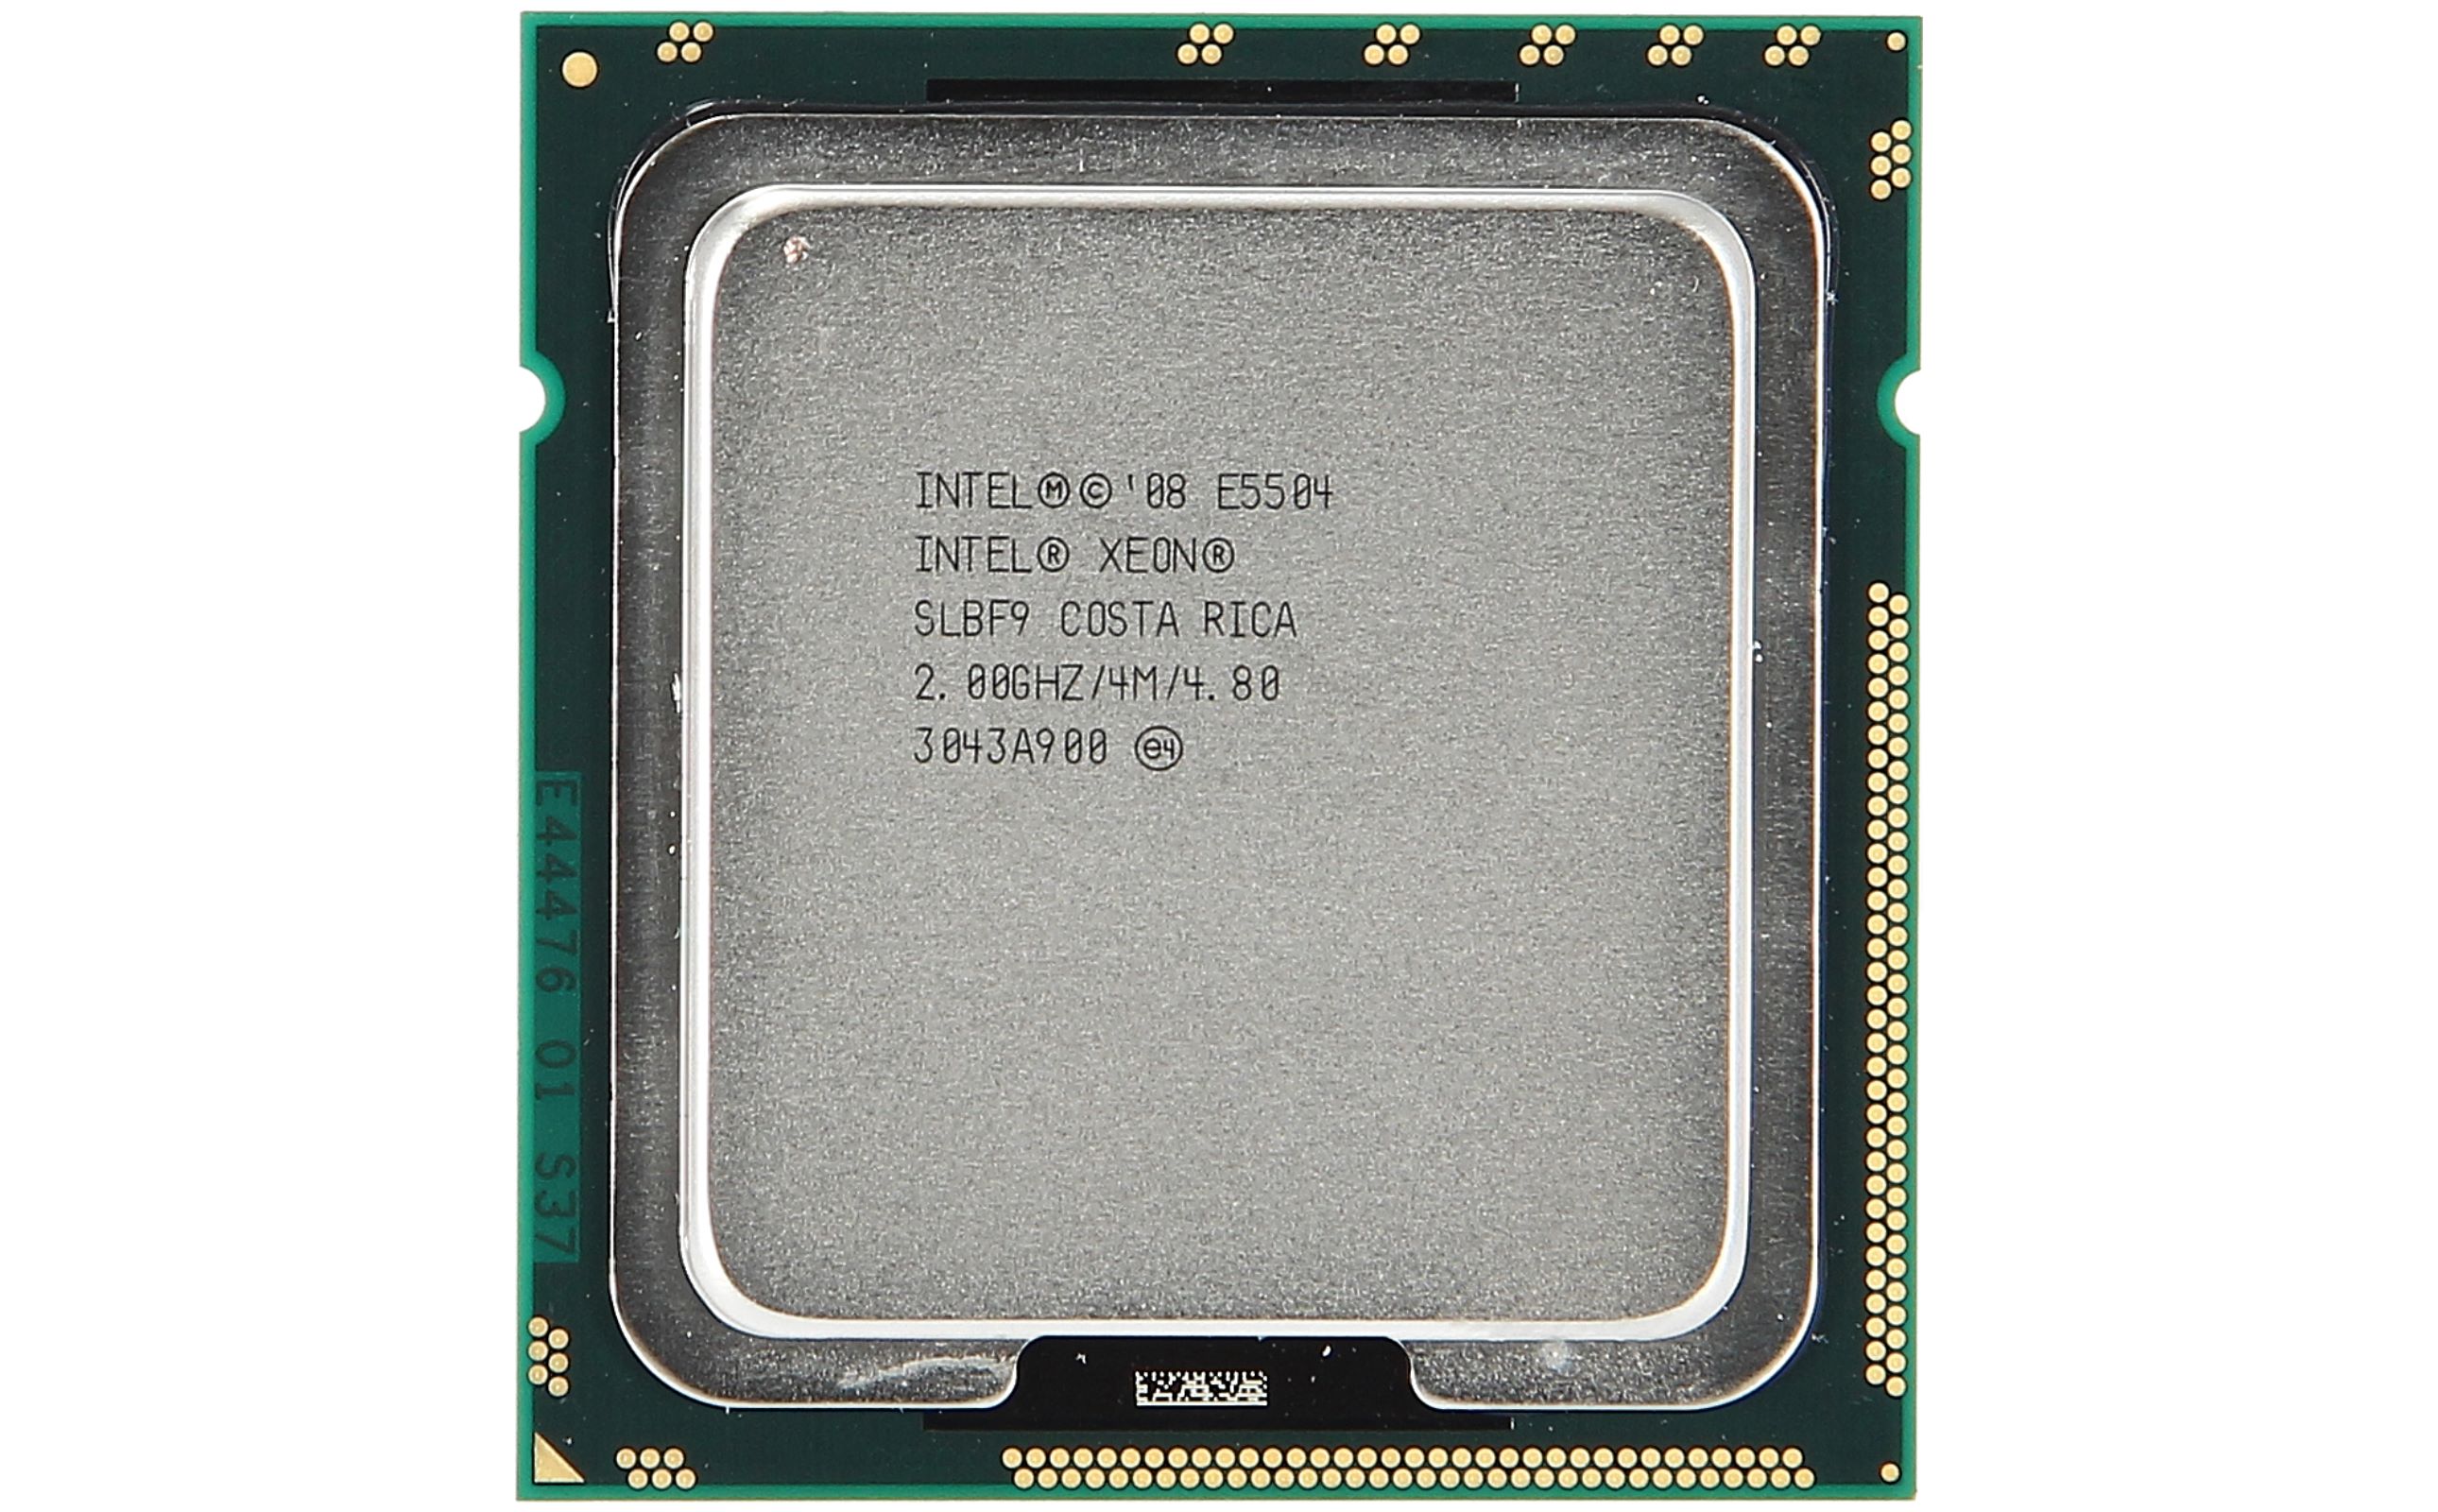 Intel - SLBF9 - INTEL XEON CPU QC E5504 4M CACHE - 2.00 GHZ - 4.80 GT/S